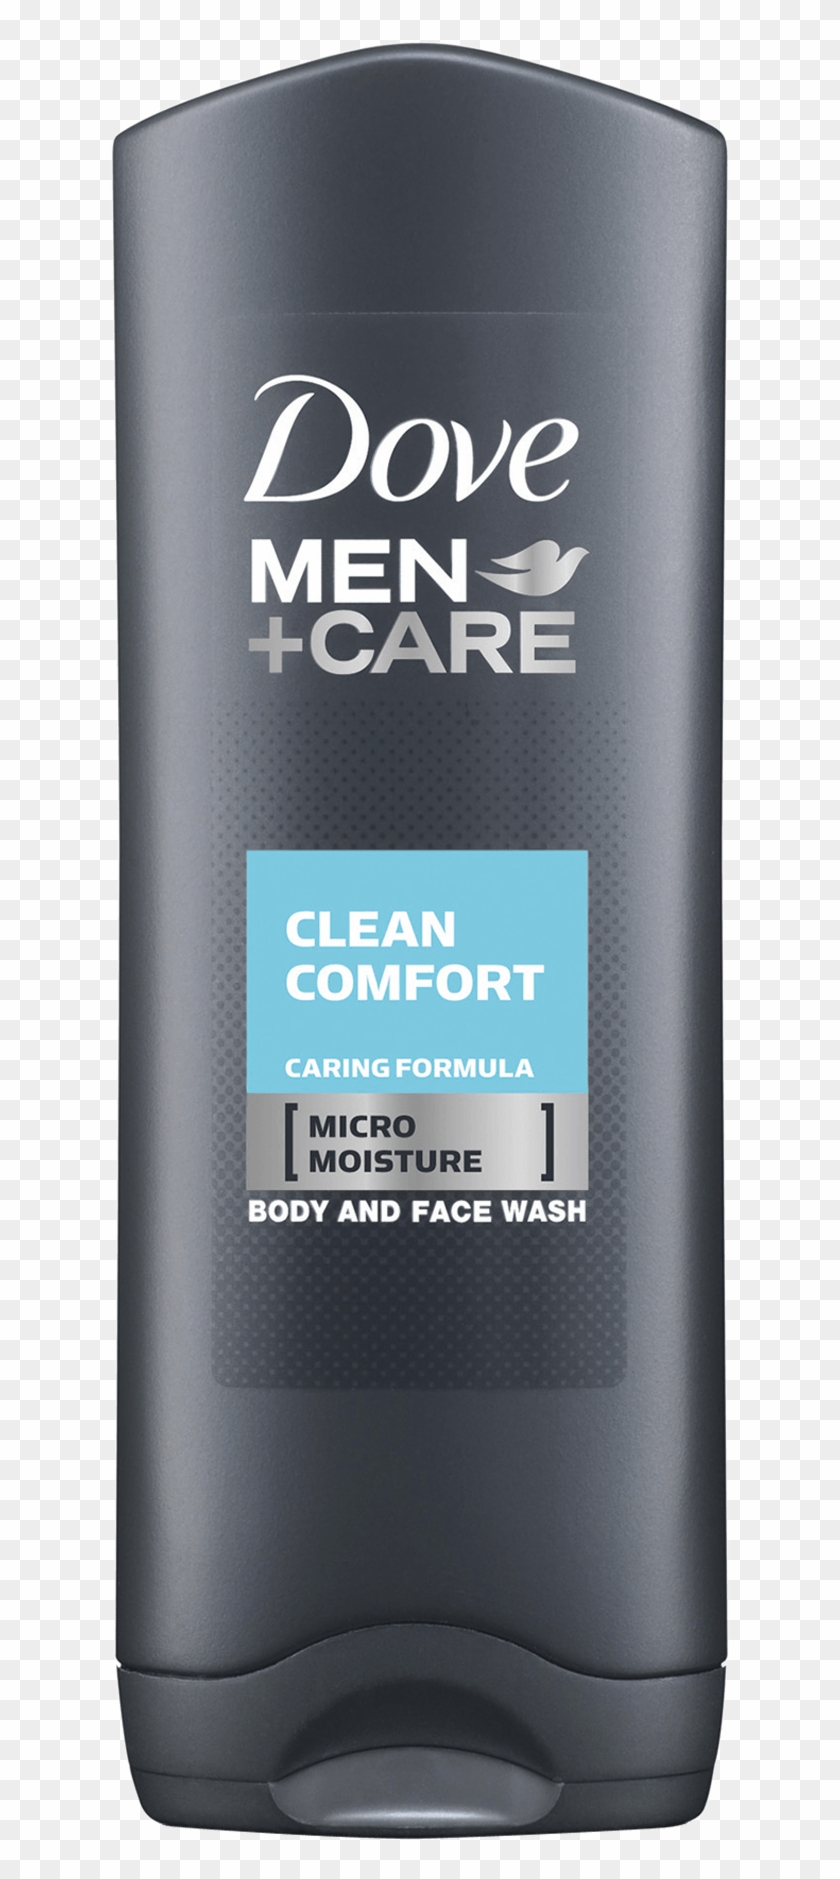 The Dove Men's Shampoo Commercial Uses Gender Roles - Dove Men Care Clipart #3361845